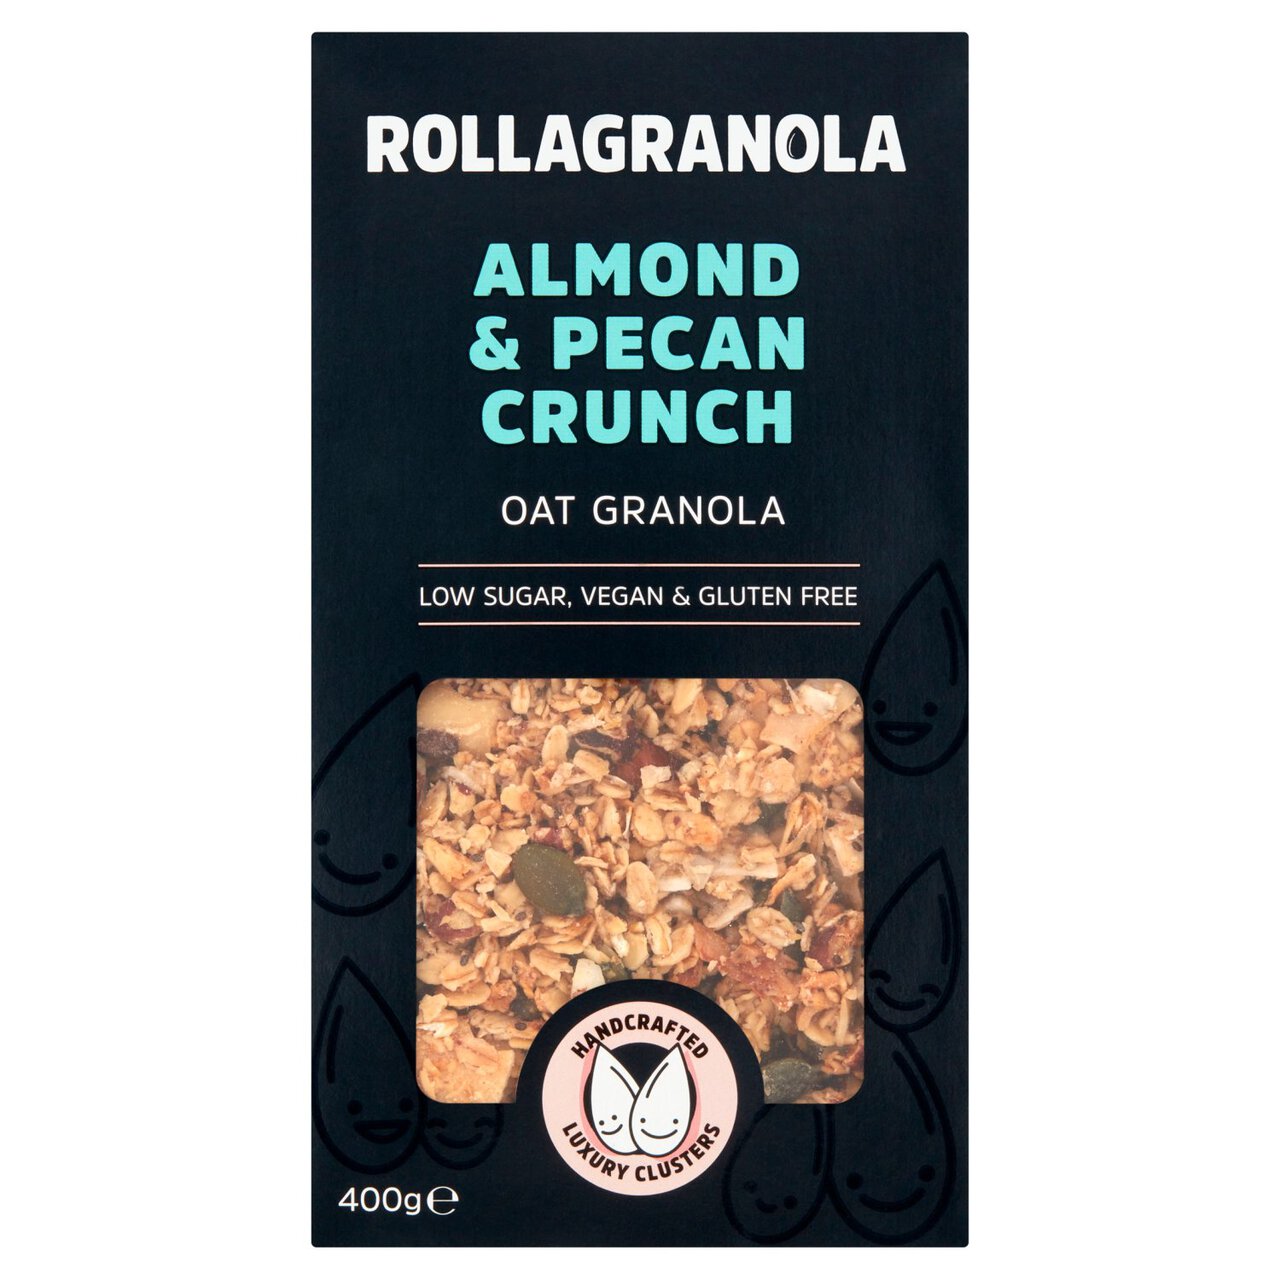 Rollagranola Almond Pecan Crunch, Oat Granola, Vegan, 2% Sugar, Gluten Free 400g